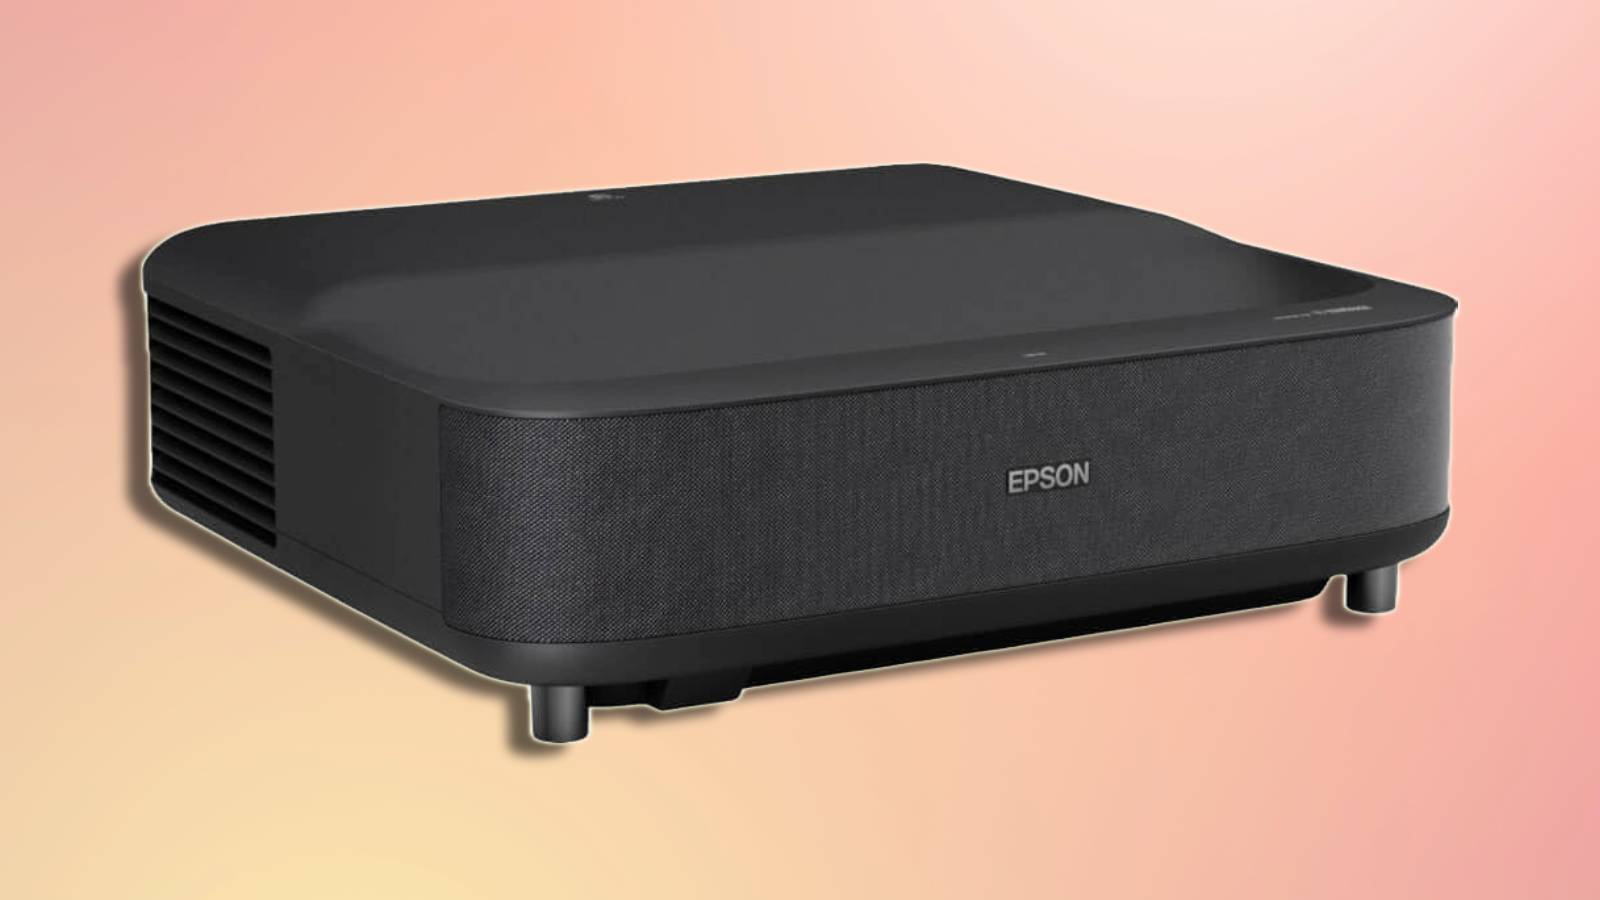 Epson EpiqVision Ultra LS500 laser projector